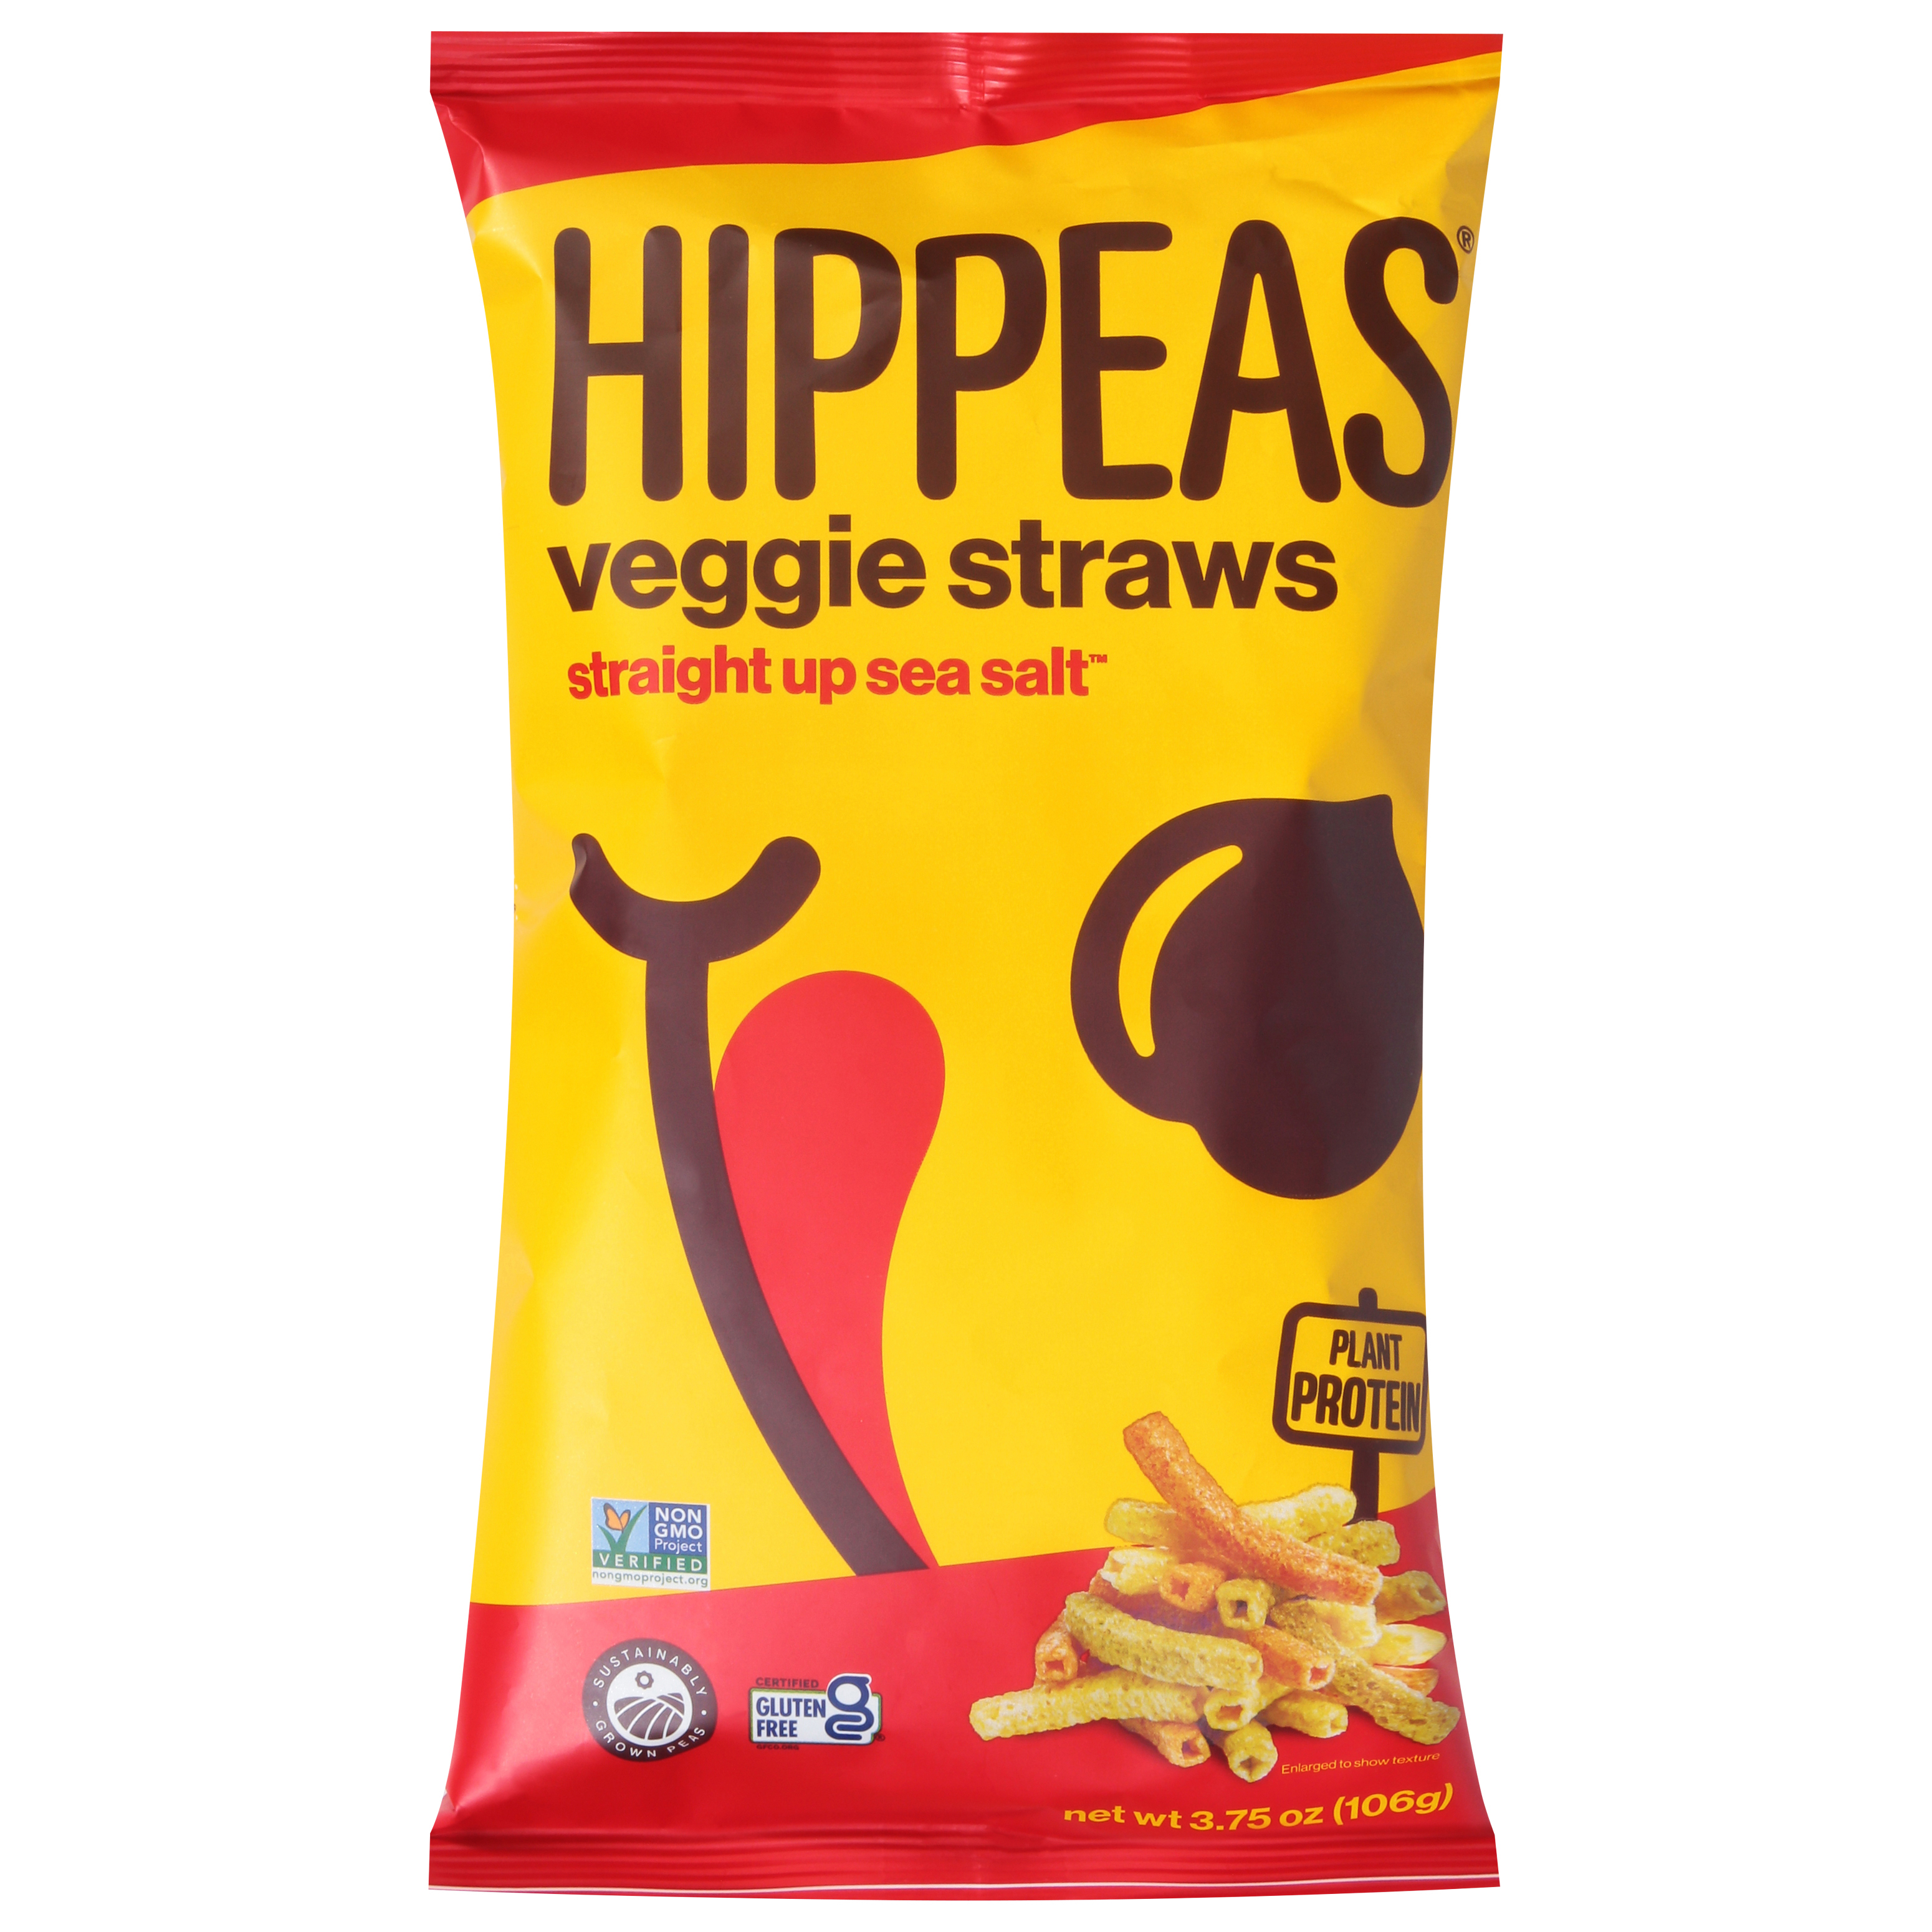 Hippeas Straight Up Sea Salt Veggies Straws 3.75 oz